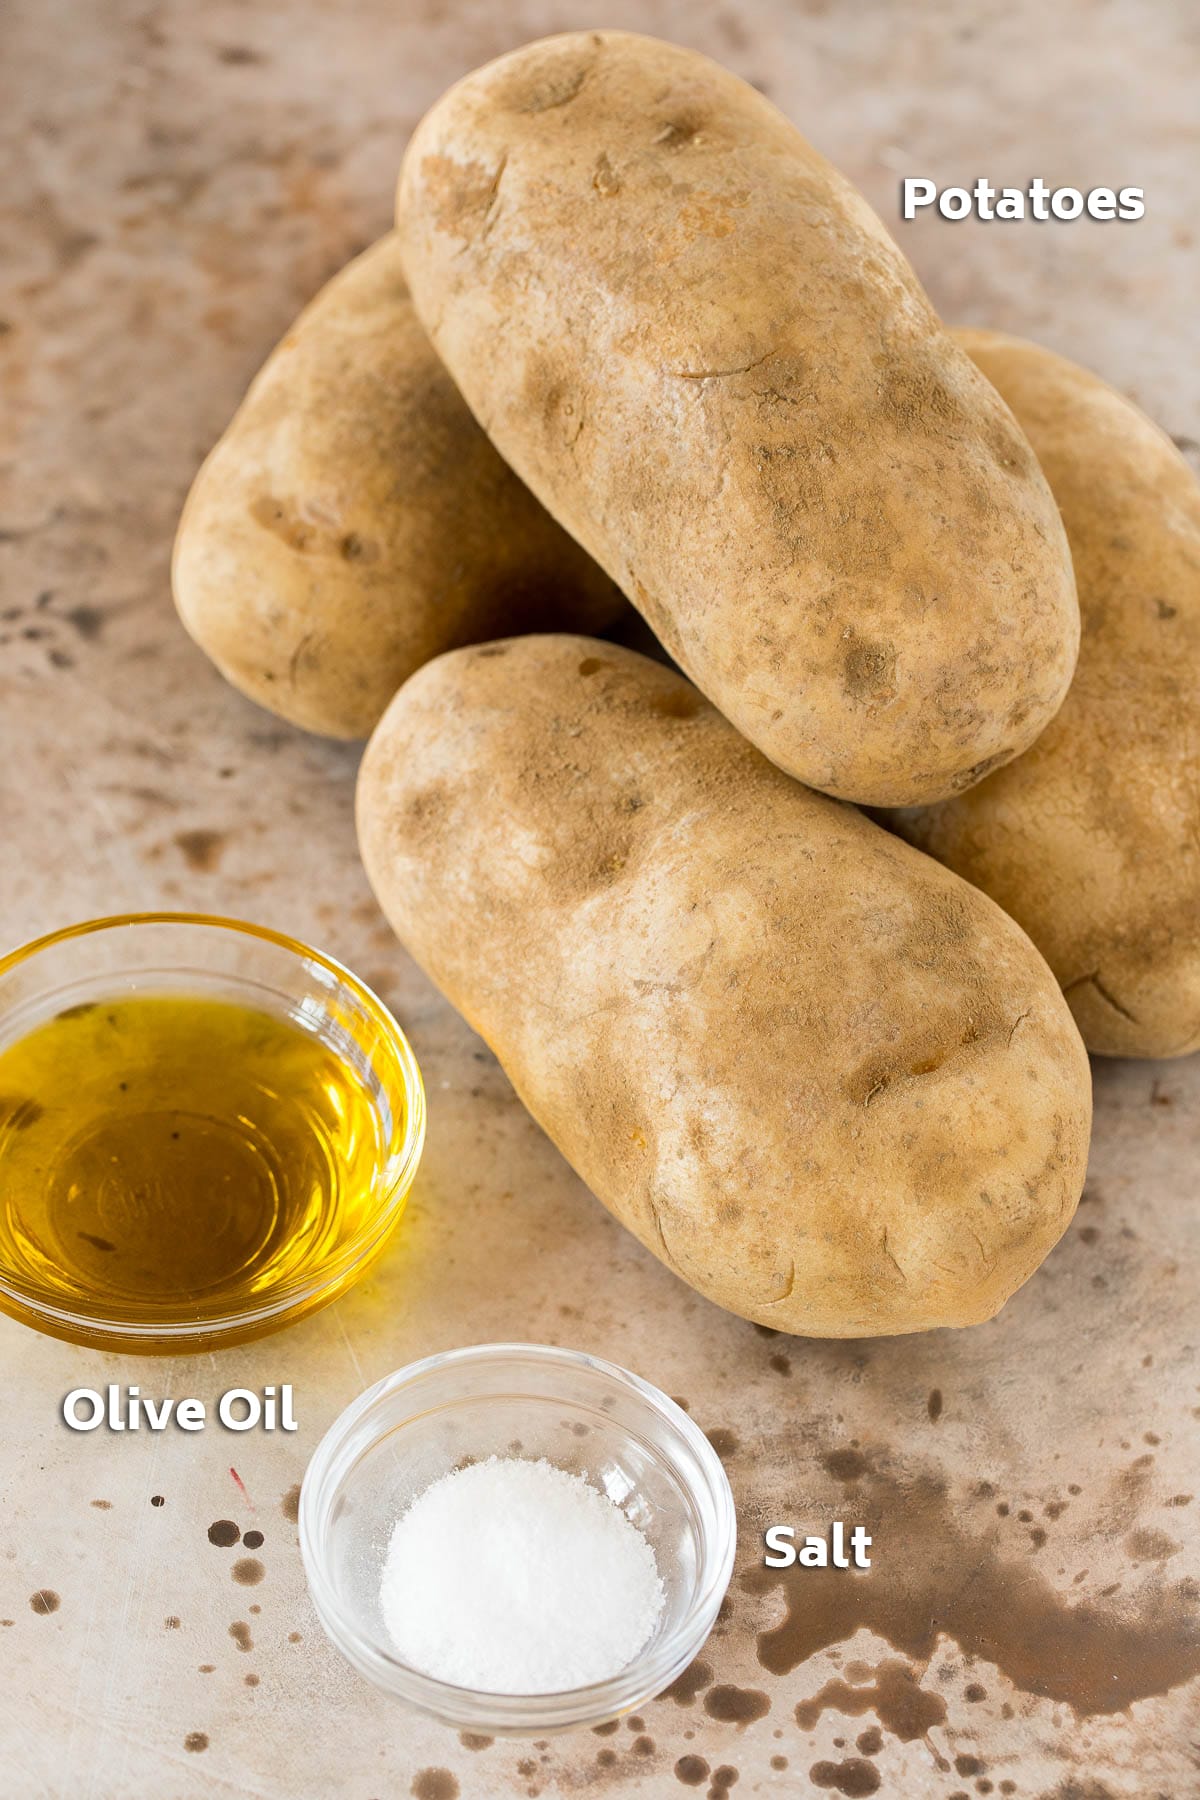 Potatoes, olive oil and salt.